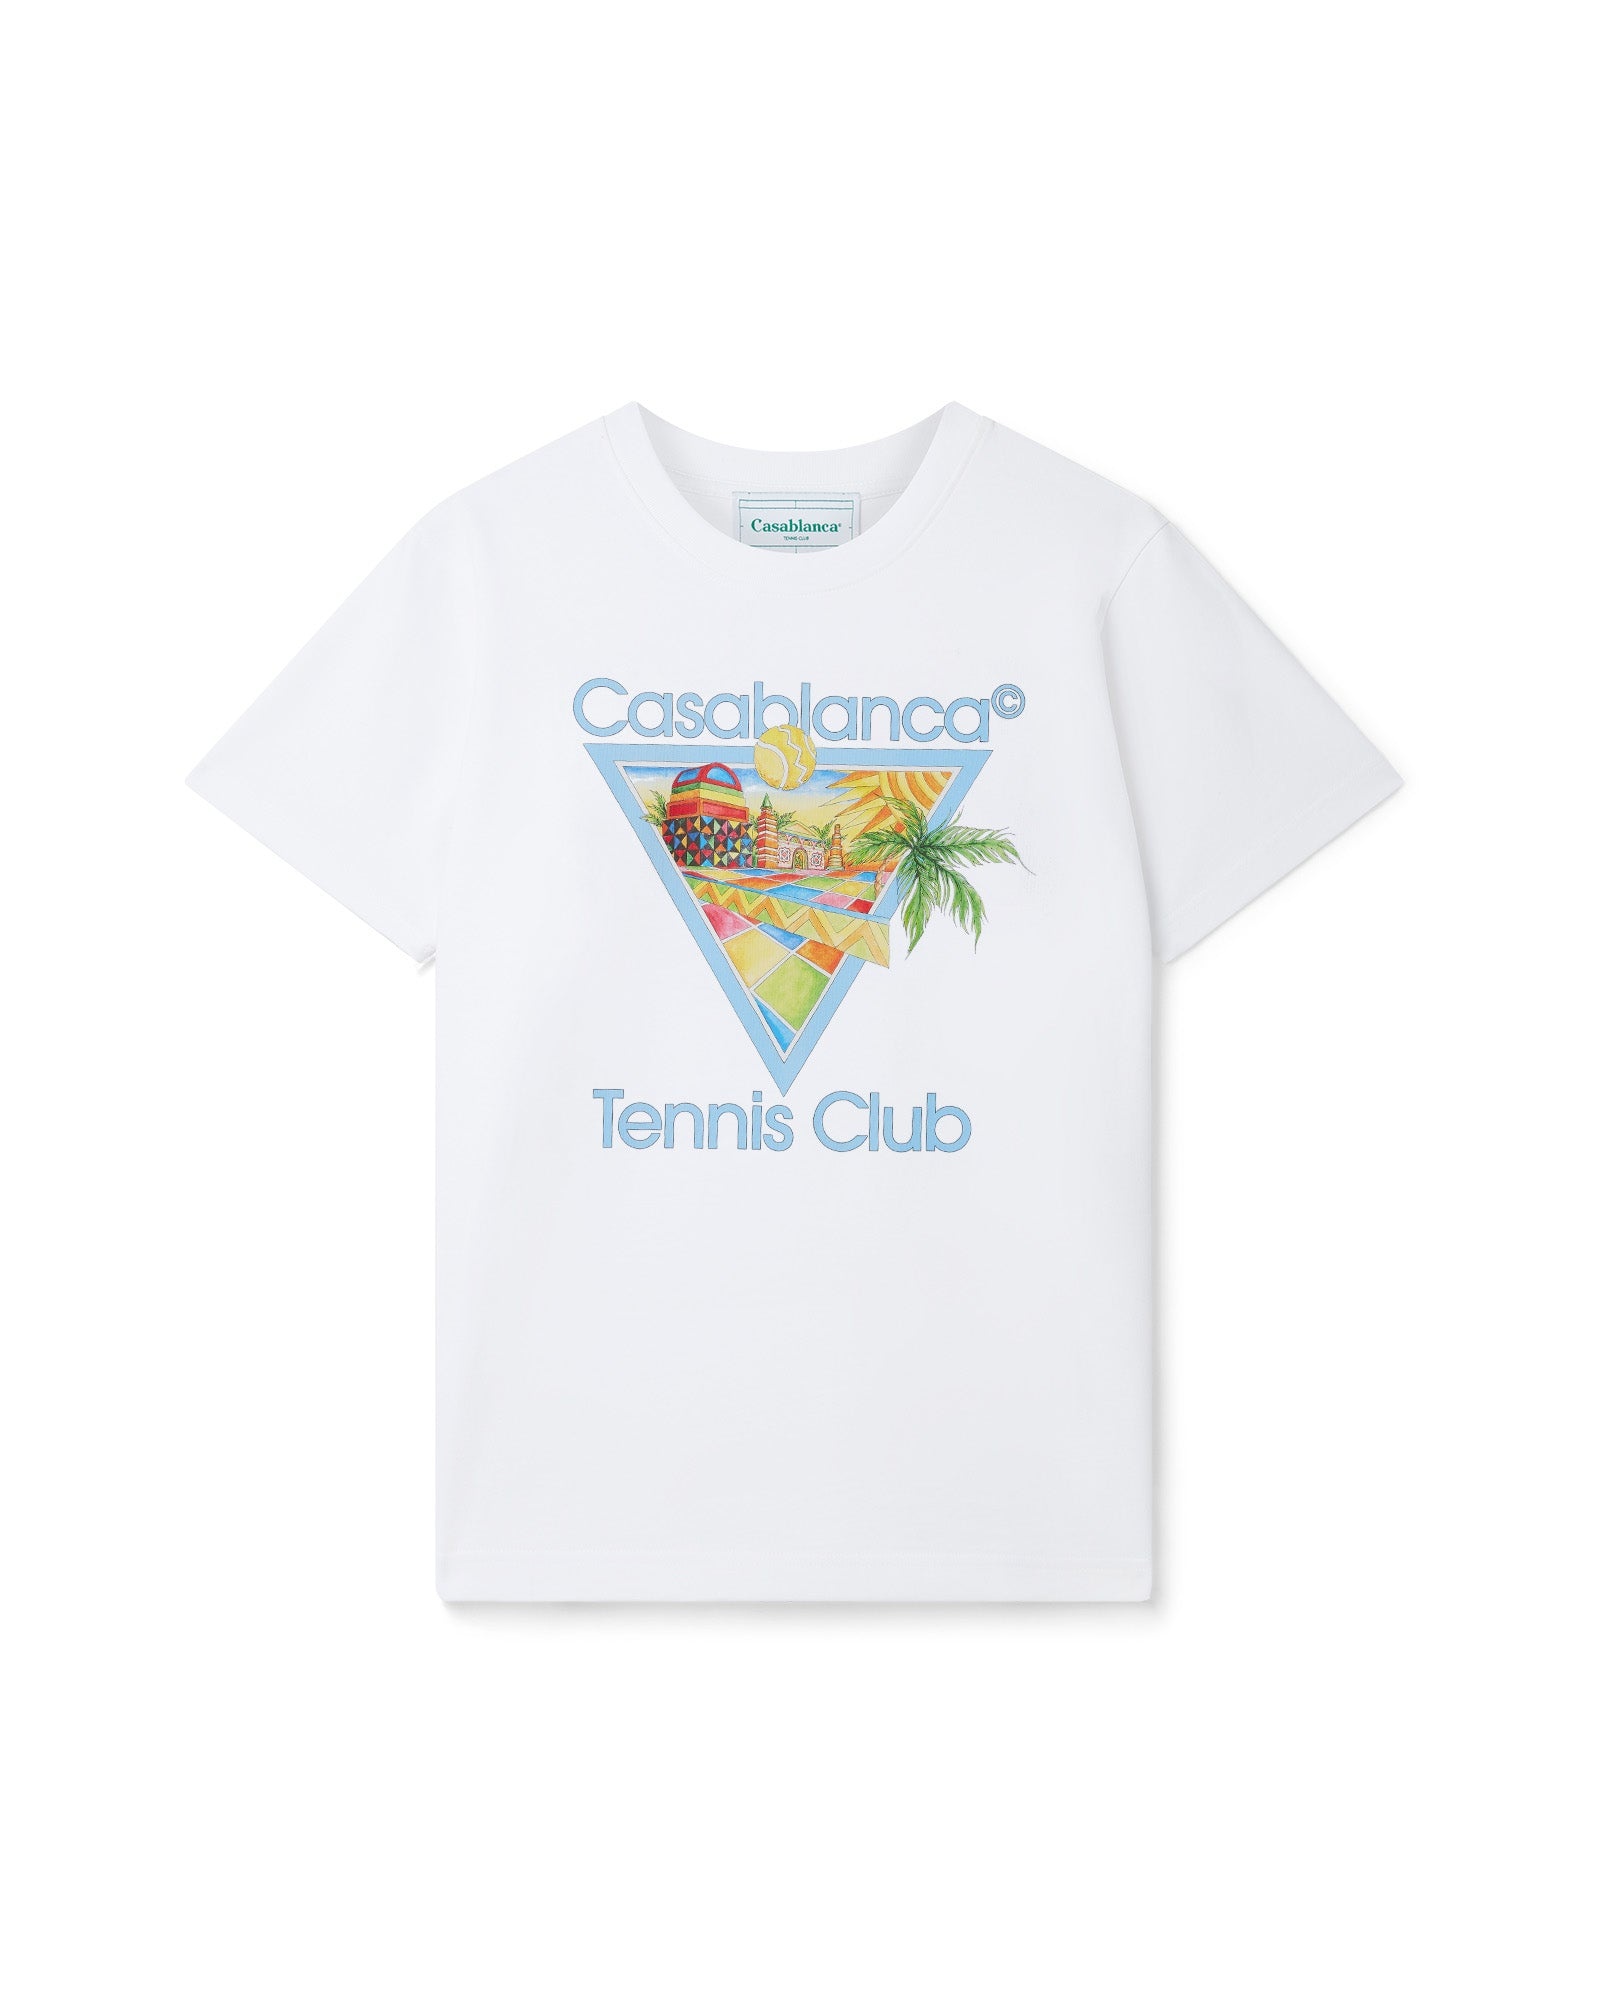 Afro Cubism Tennis Club T-Shirt - 1